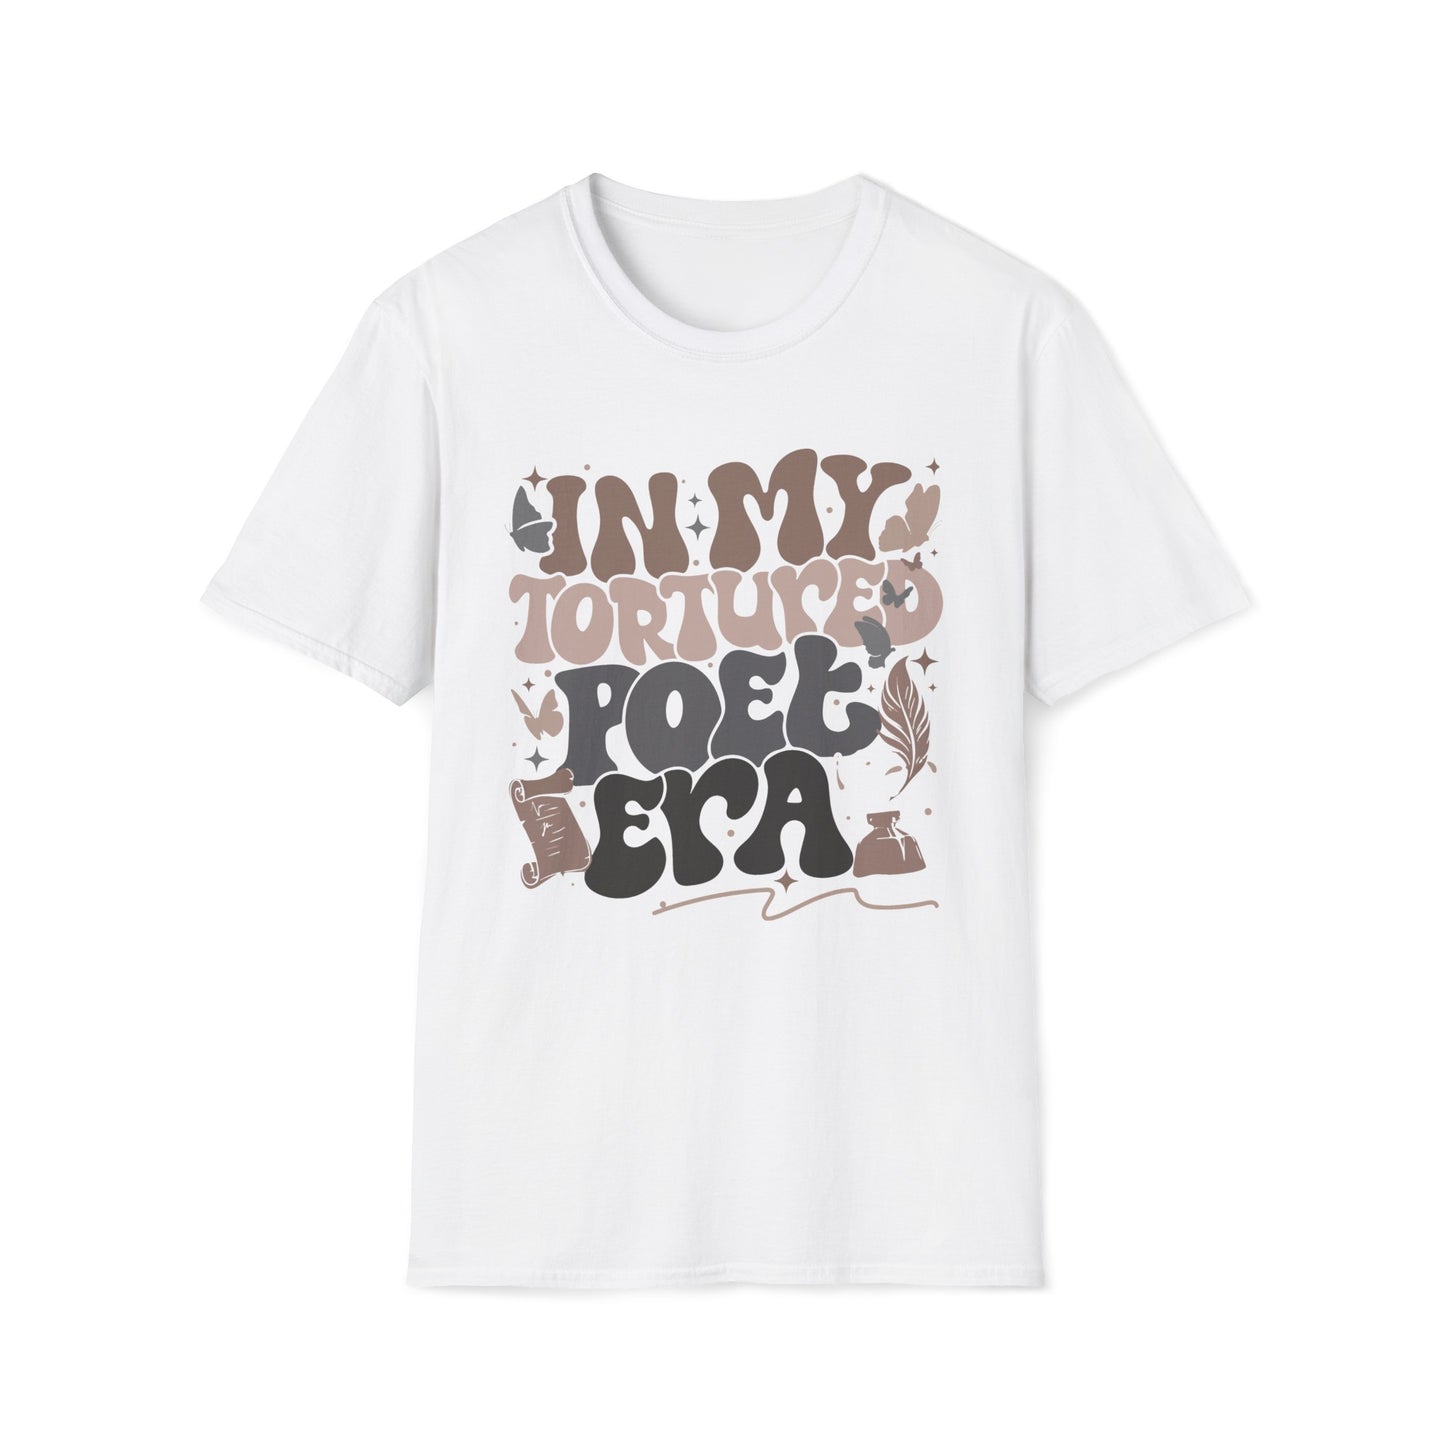 In My Tortured Poet Era - Unisex Softstyle T-Shirt